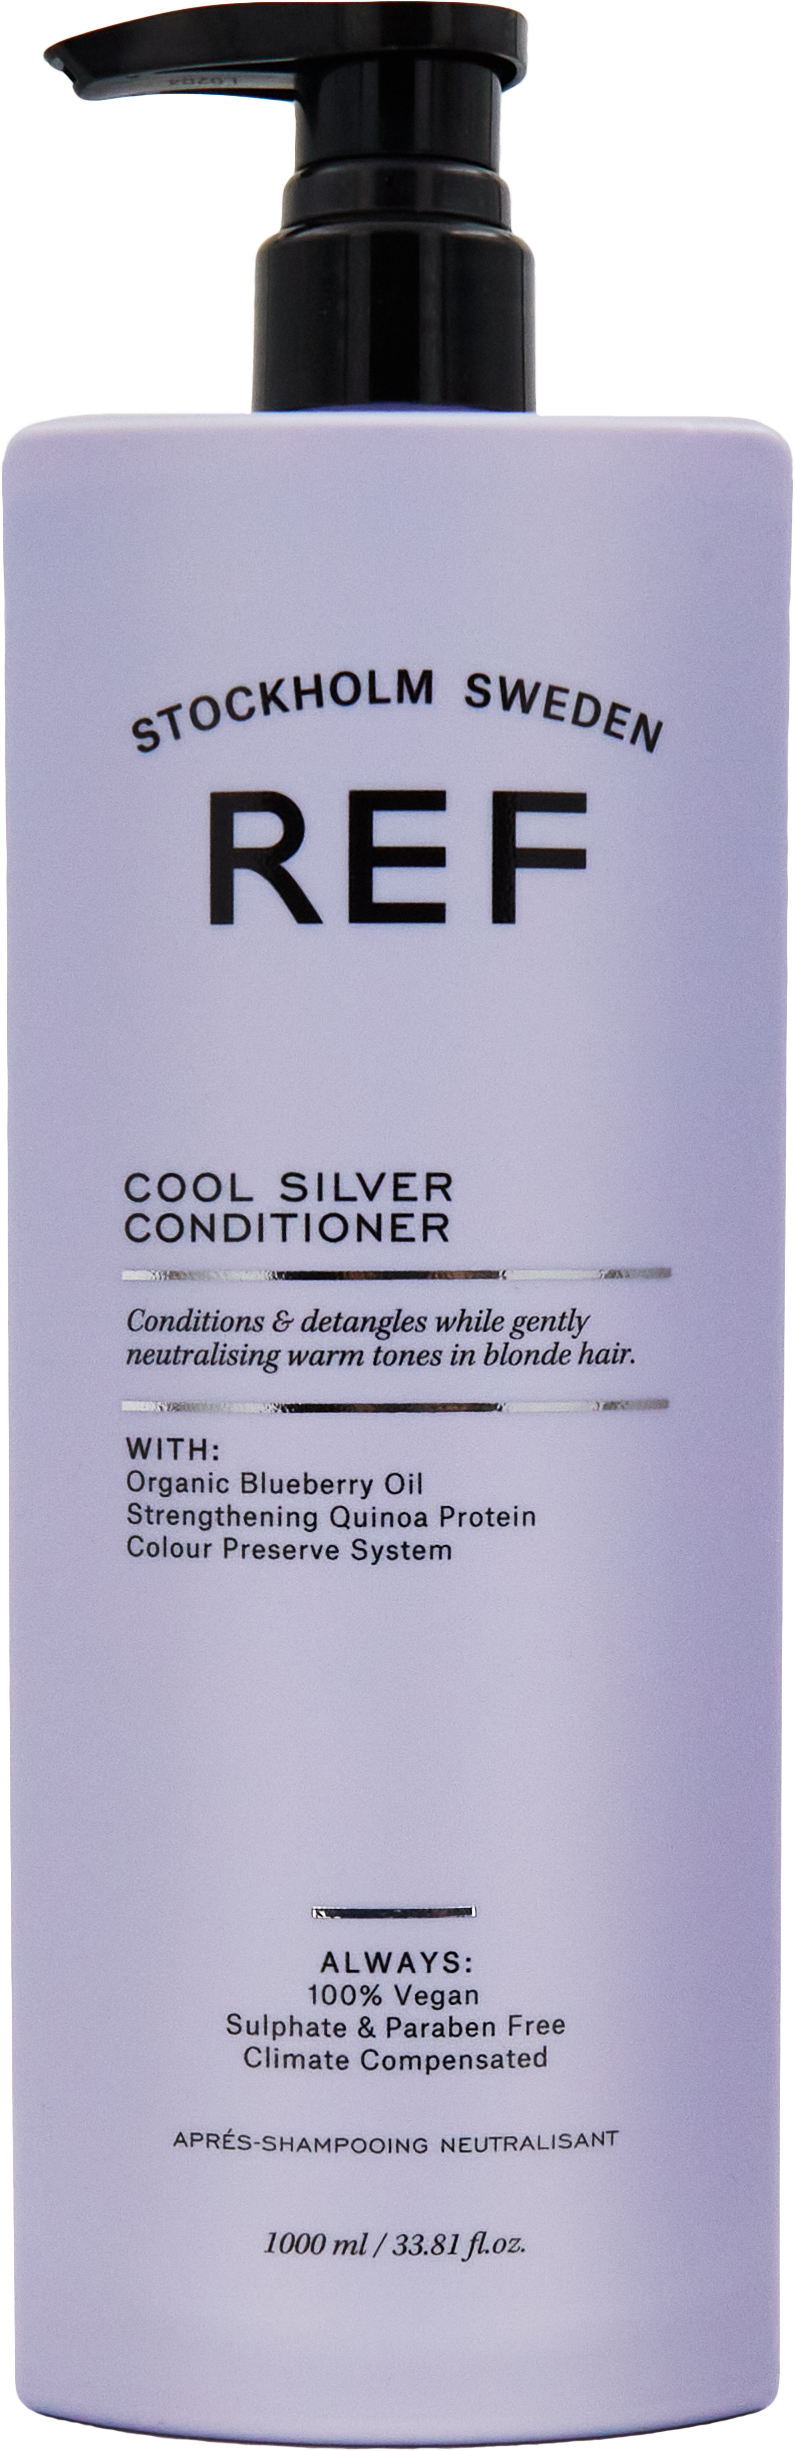 REF Cool Silver Conditioner